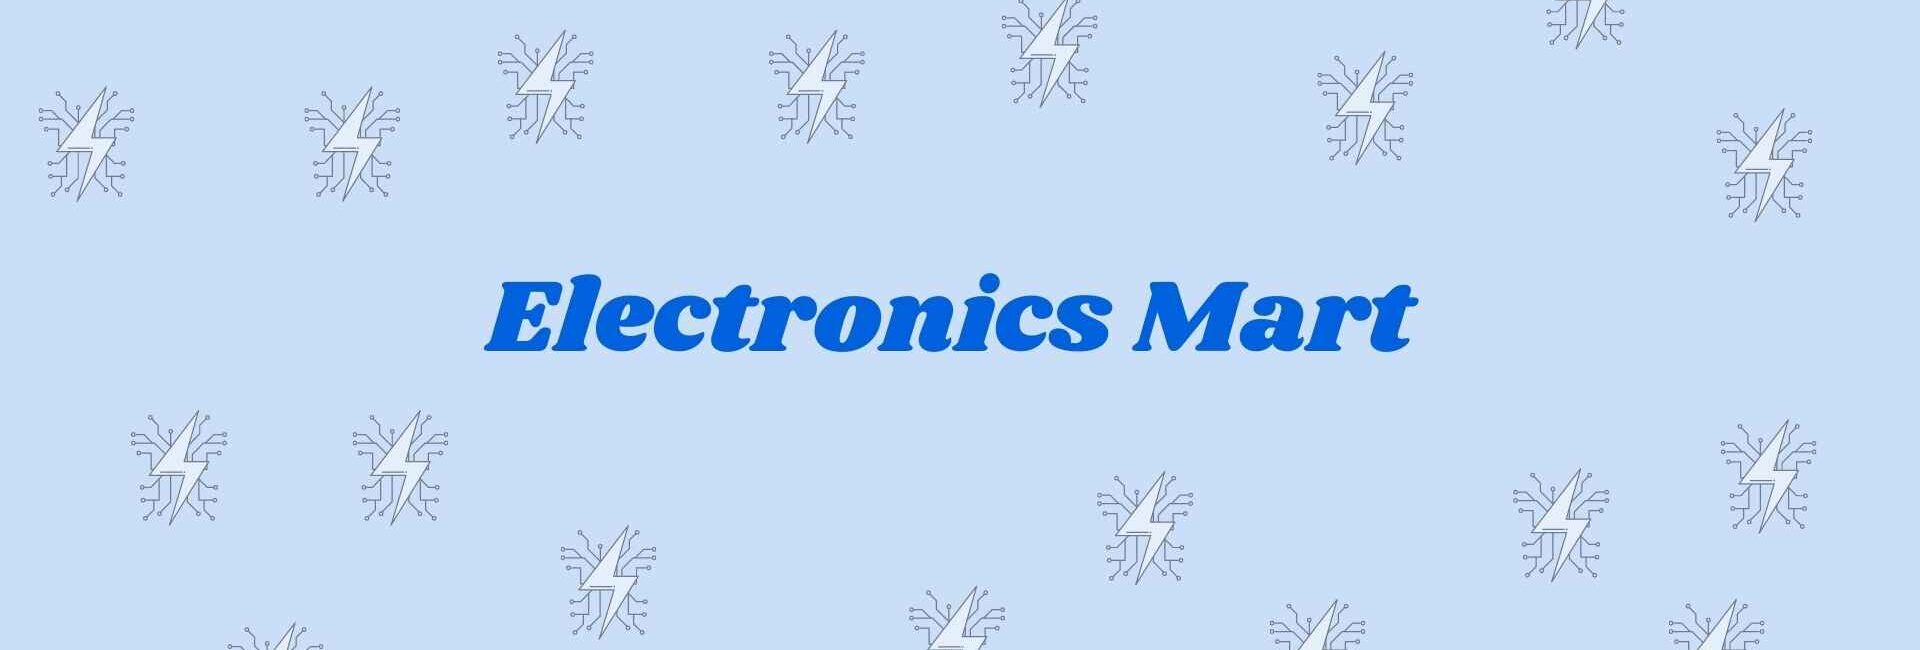 Electronics Mart - Electronics Goods Dealer in Noida